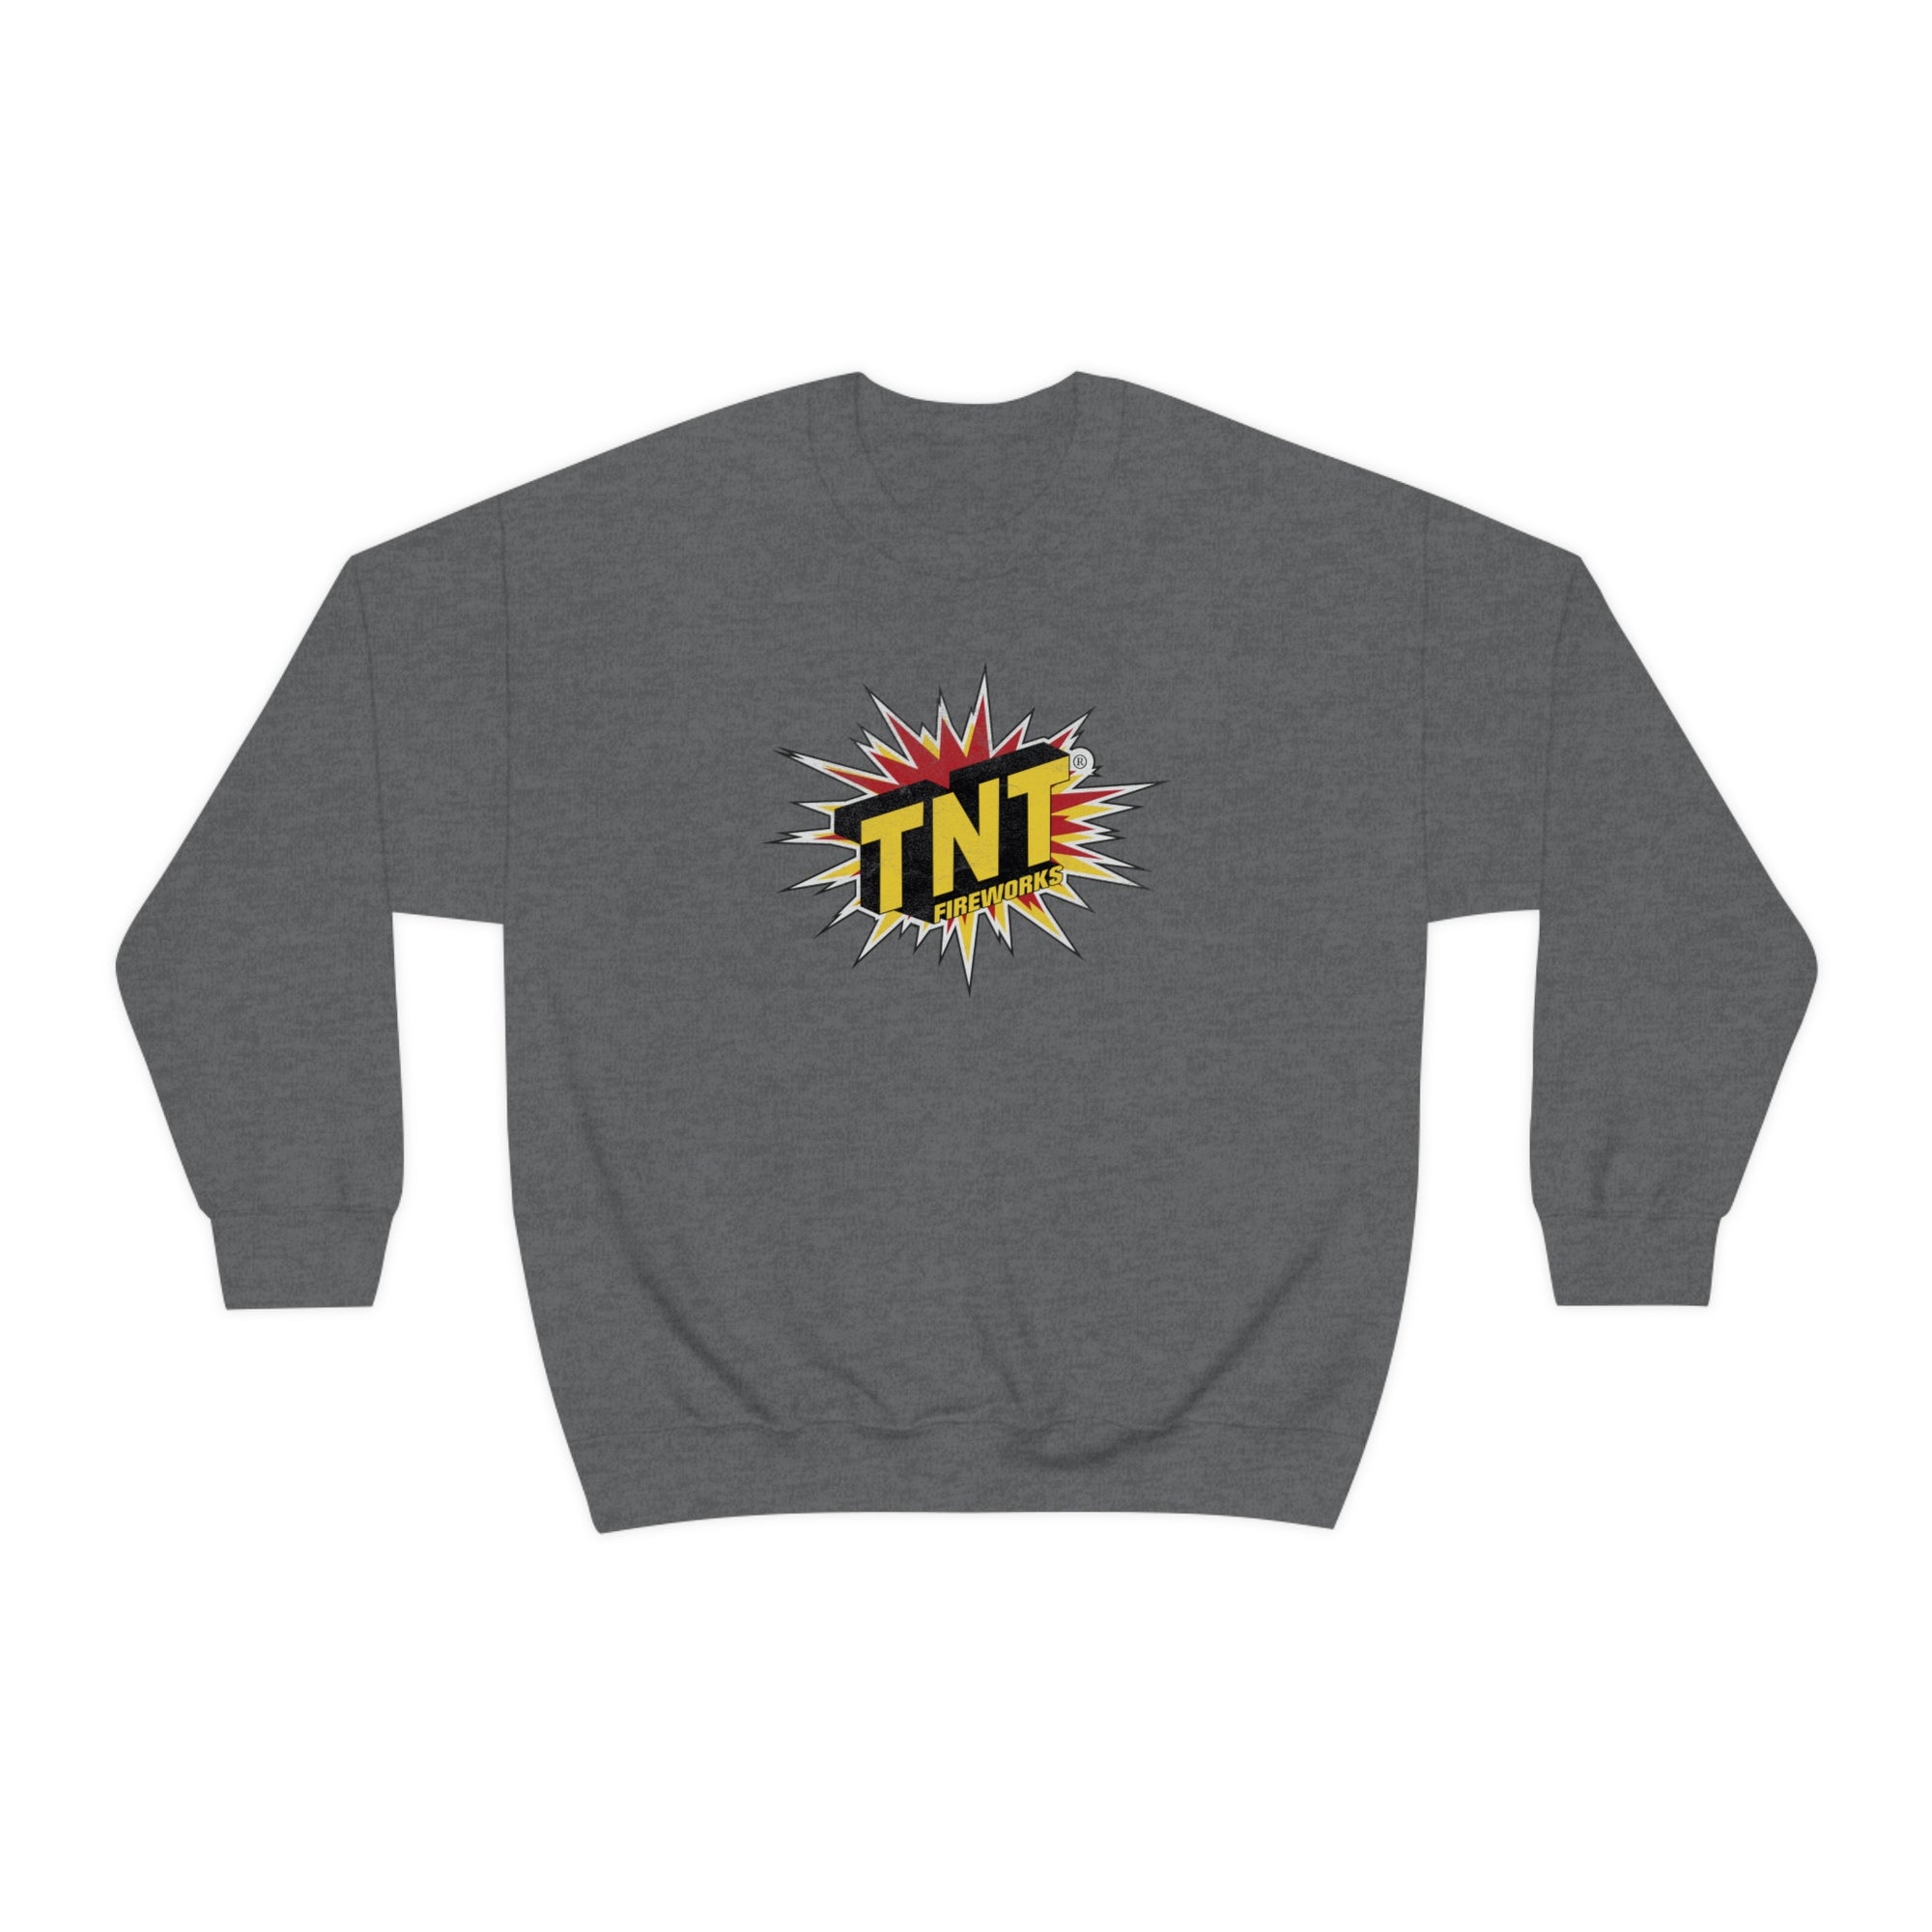 TNT Brand Crewneck Sweatshirt - Celebrate Everyday